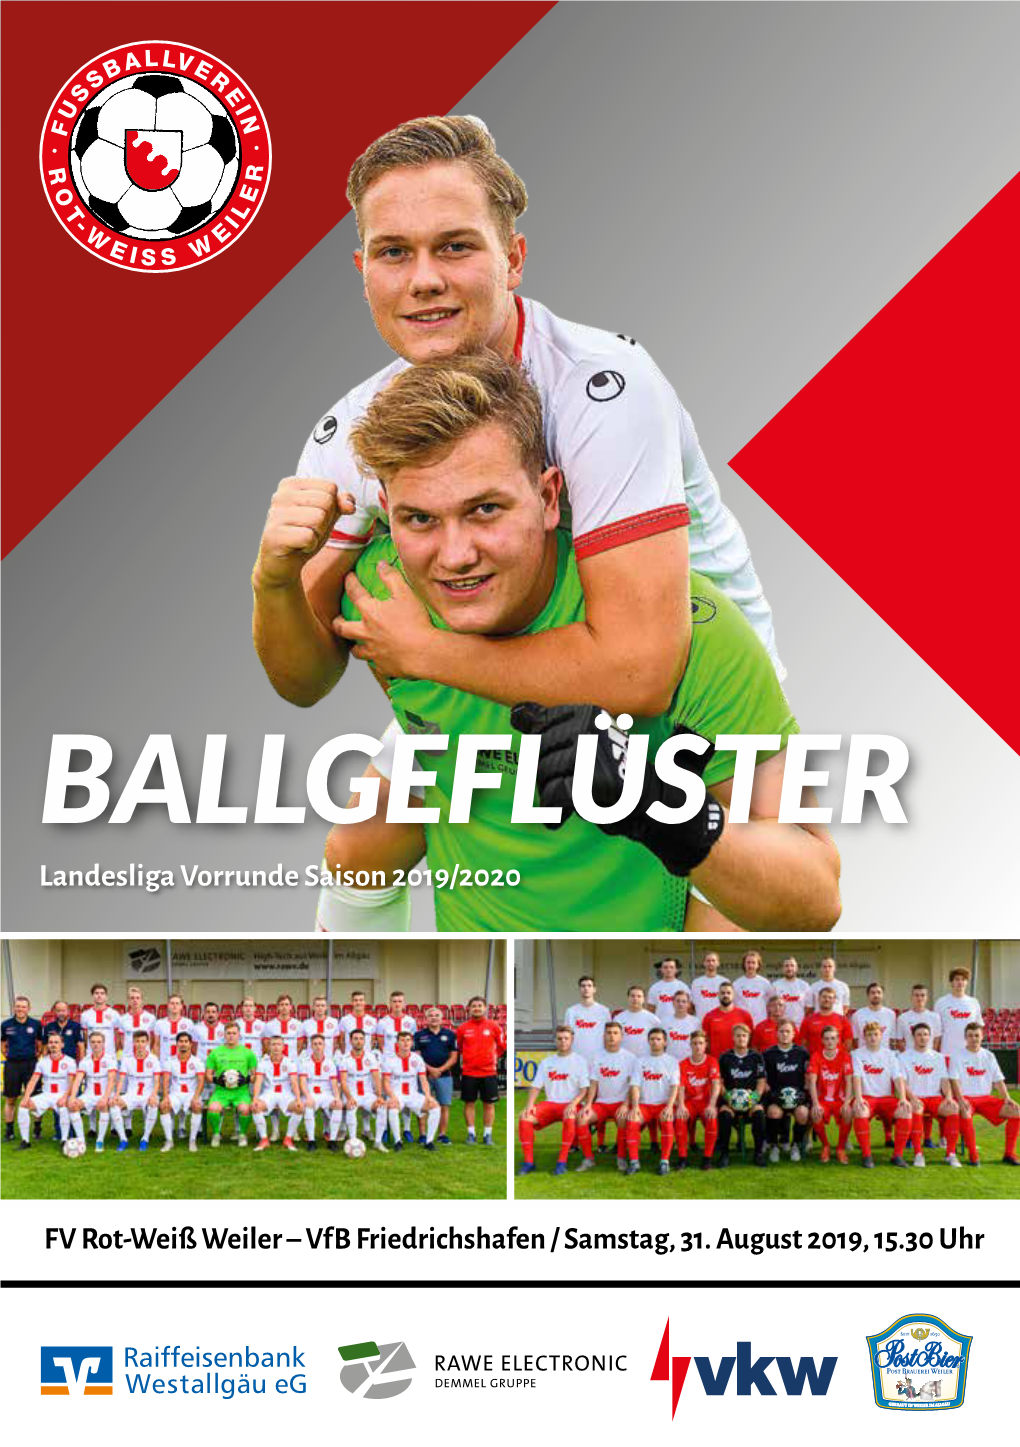 BALLGEFLÜSTER Landesliga Vorrunde Saison 2019/2020